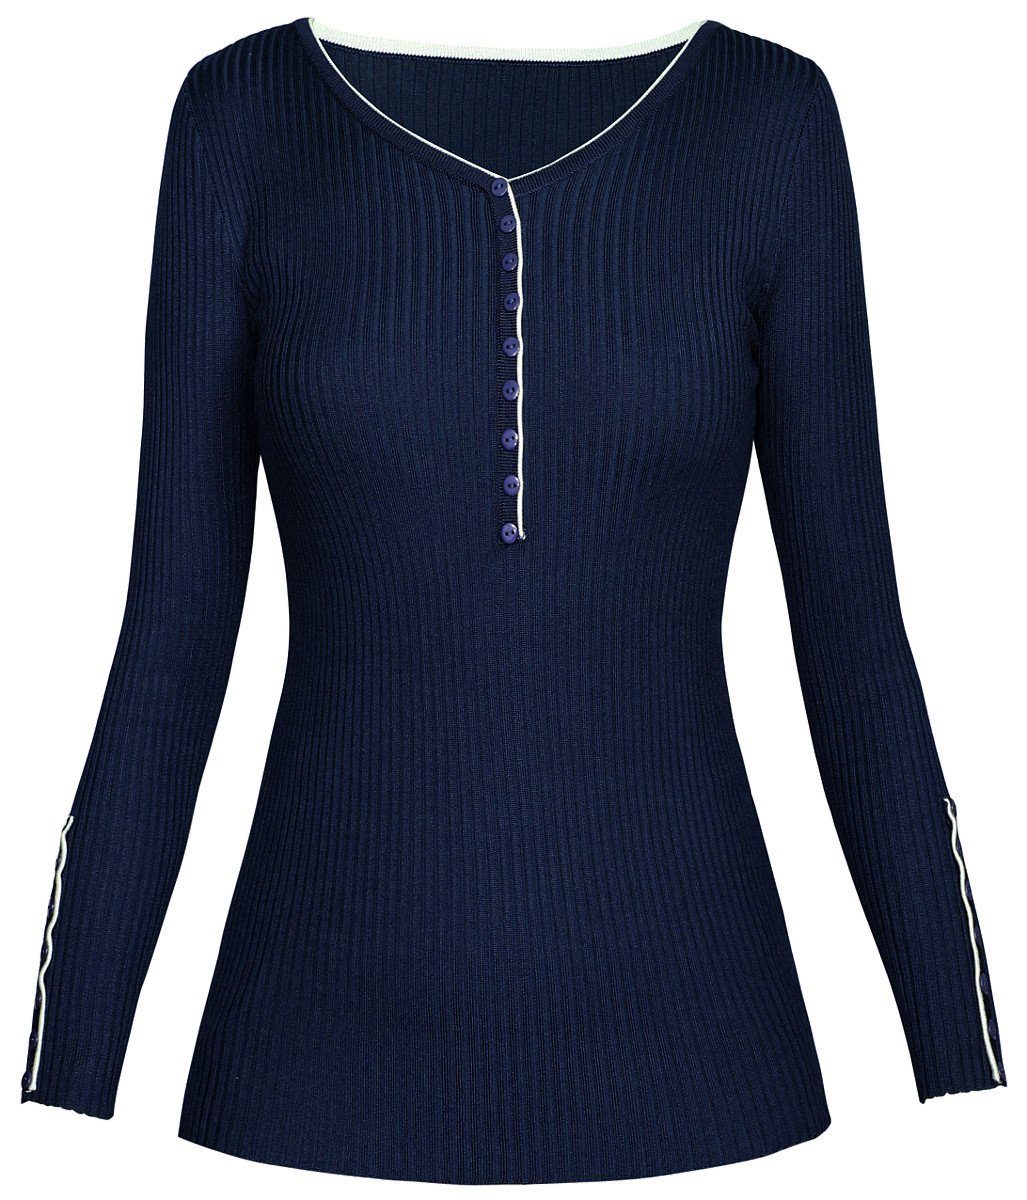 dy_mode V-Ausschnitt-Pullover Damen Pullover Enganliegend Rippenstrick Pulli mit V-Ausschnitt in Unifarbe PUL001-Tiefblau